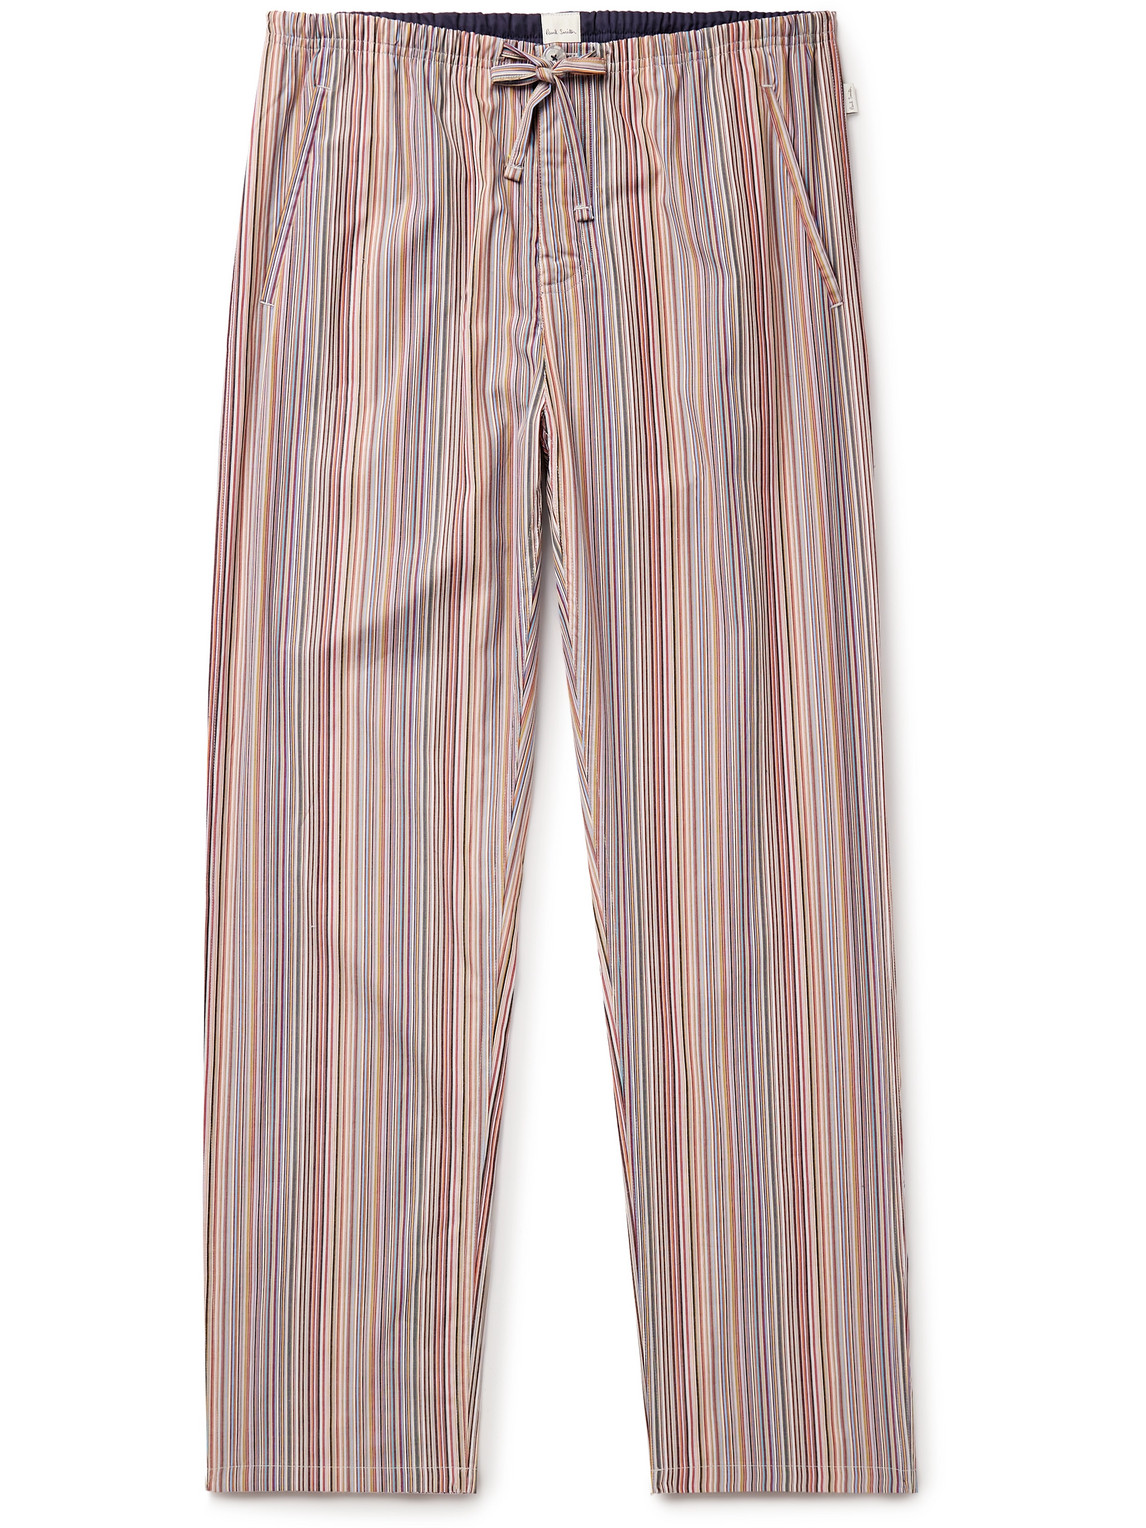 Paul Smith - Striped Cotton Pyjama Trousers - Men - Red - S von Paul Smith